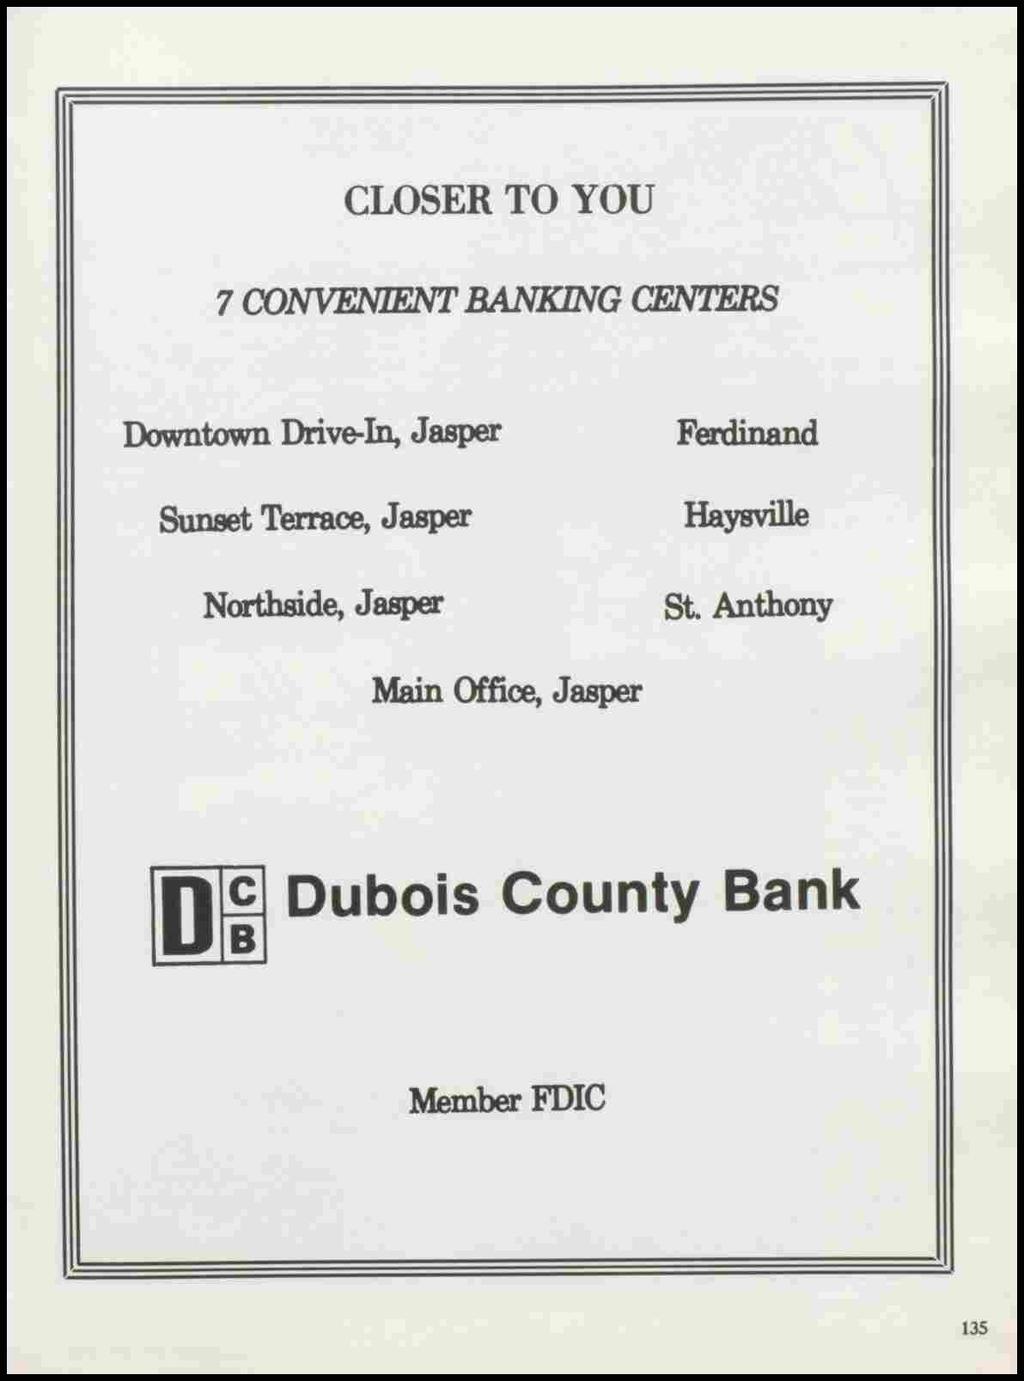 CLOSER TO YOU 7 CONVENIENT BANKING CENTERS Downtown Drive-In, Jasper Sunset Terrare, Jasper